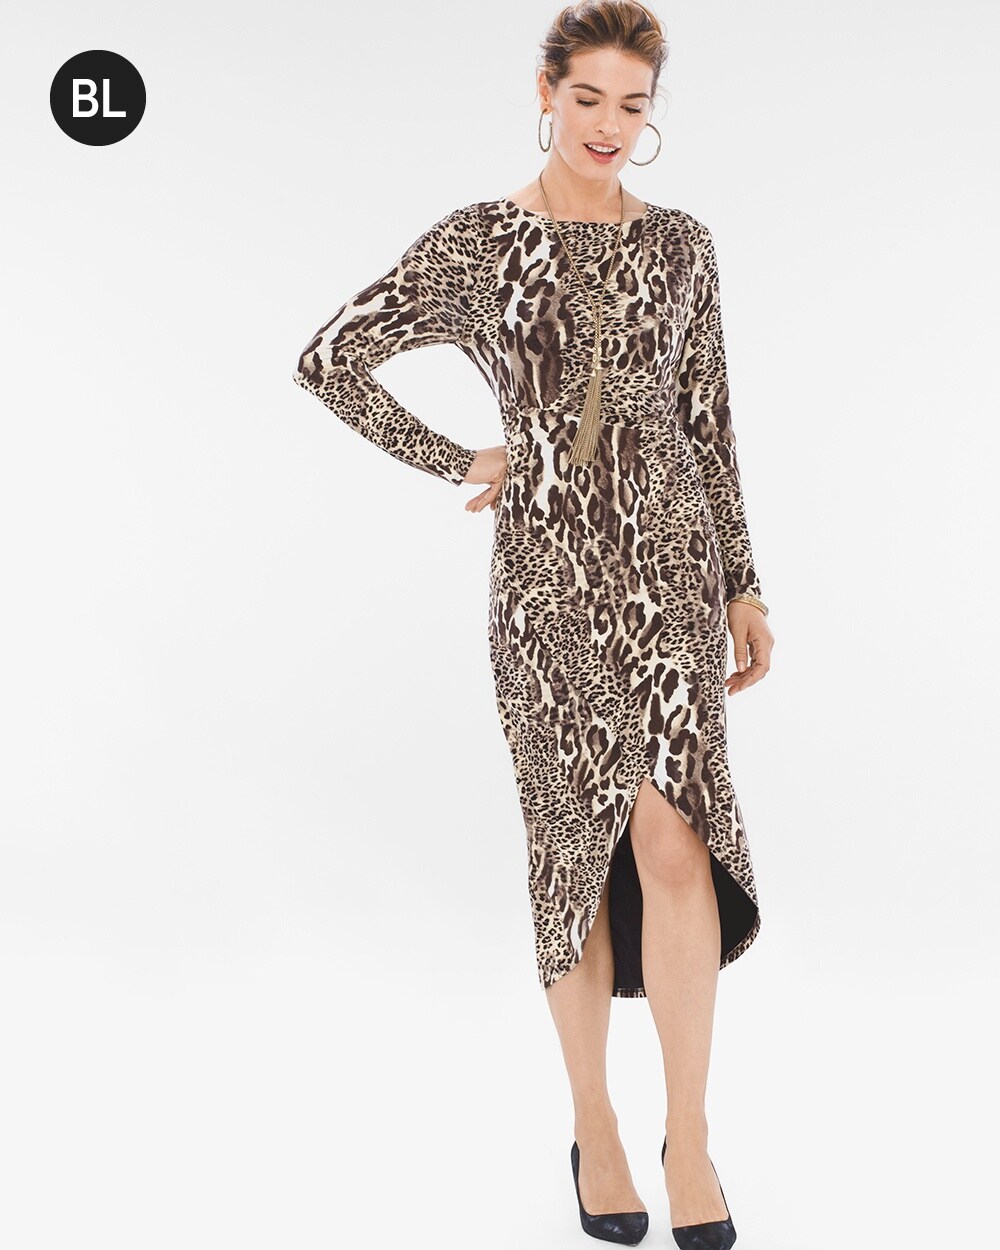 Black Label Leopard-Print Wrap Dress